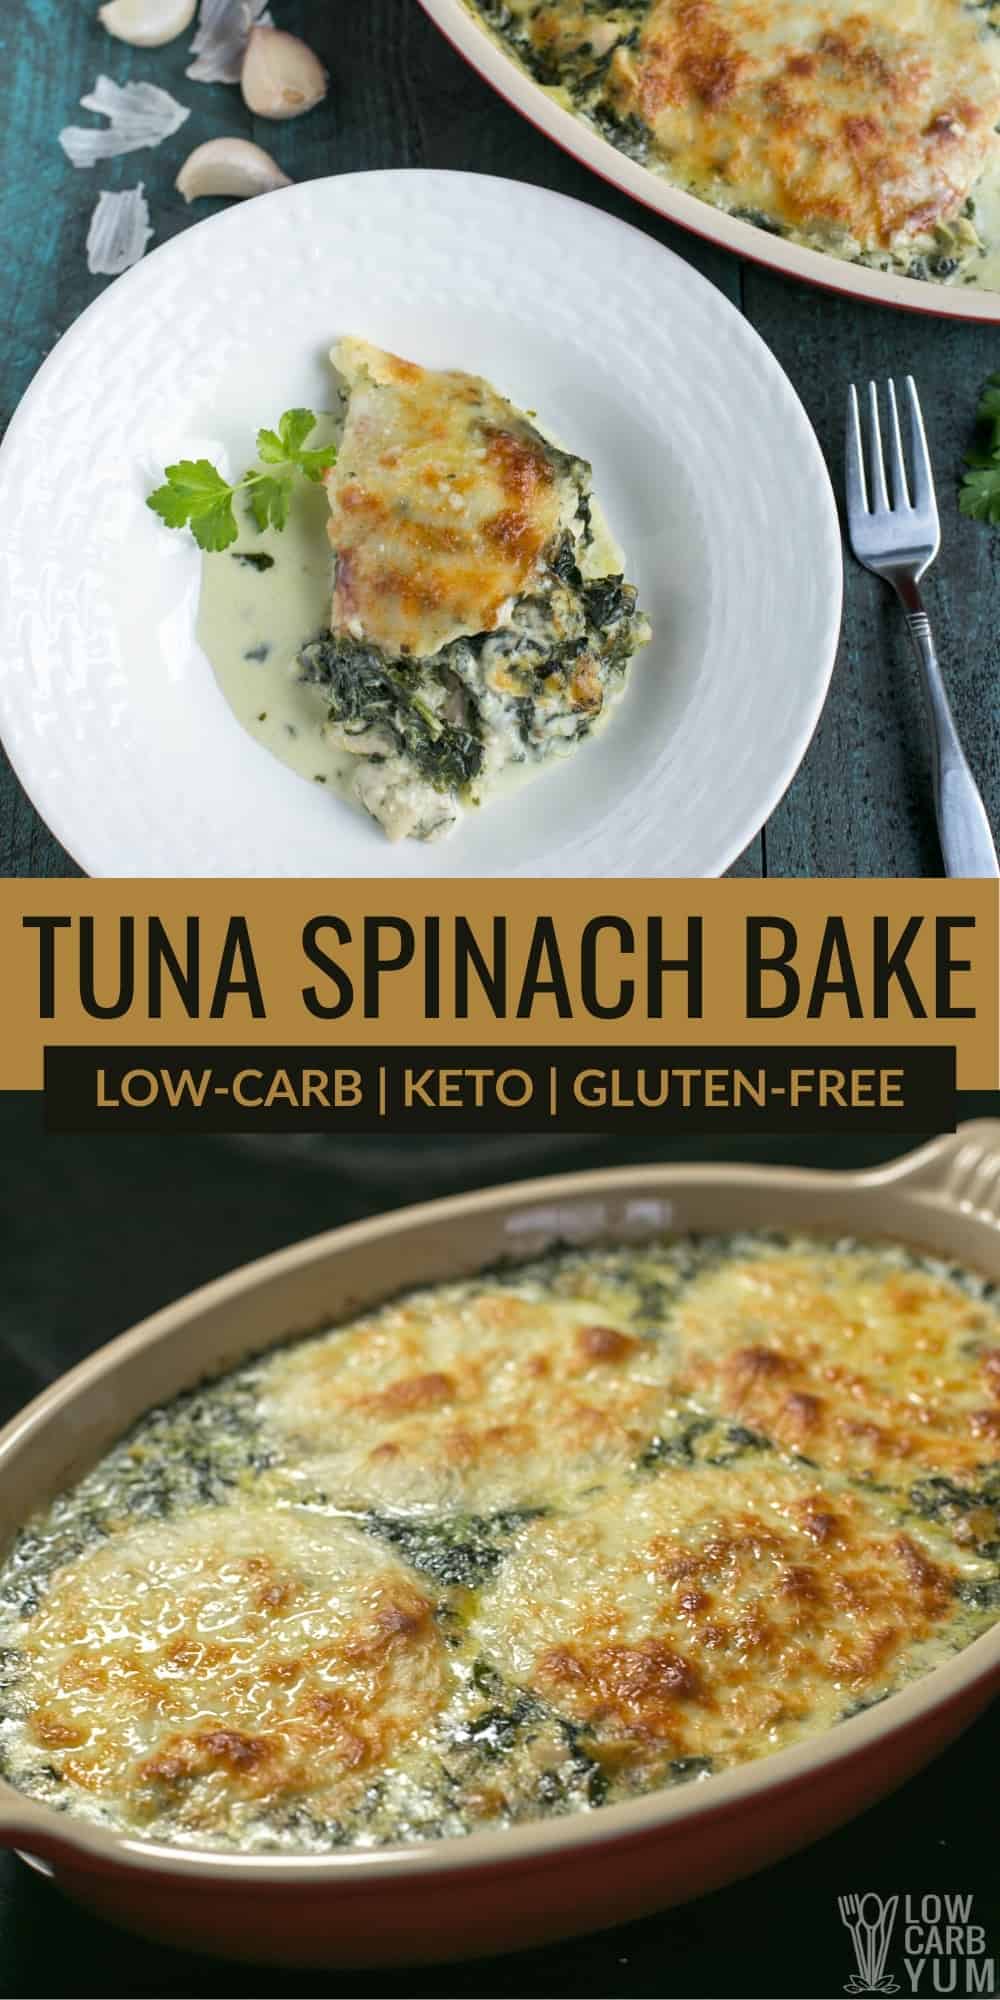 tuna spinach casserole bake pinterest image